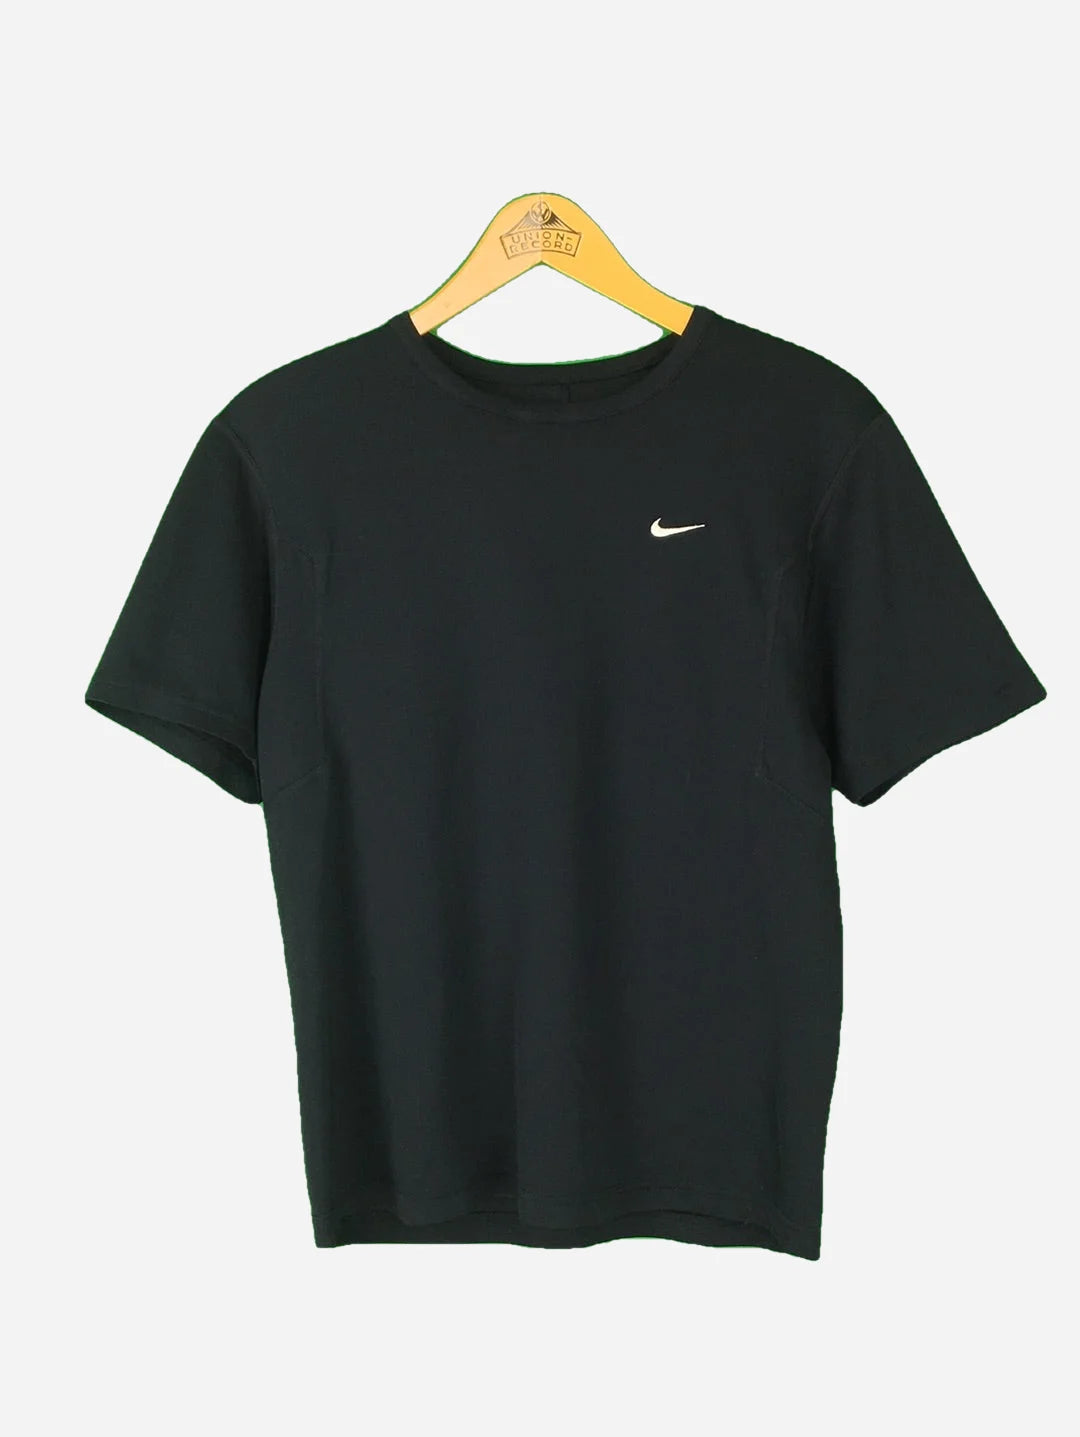 Nike jersey (S)